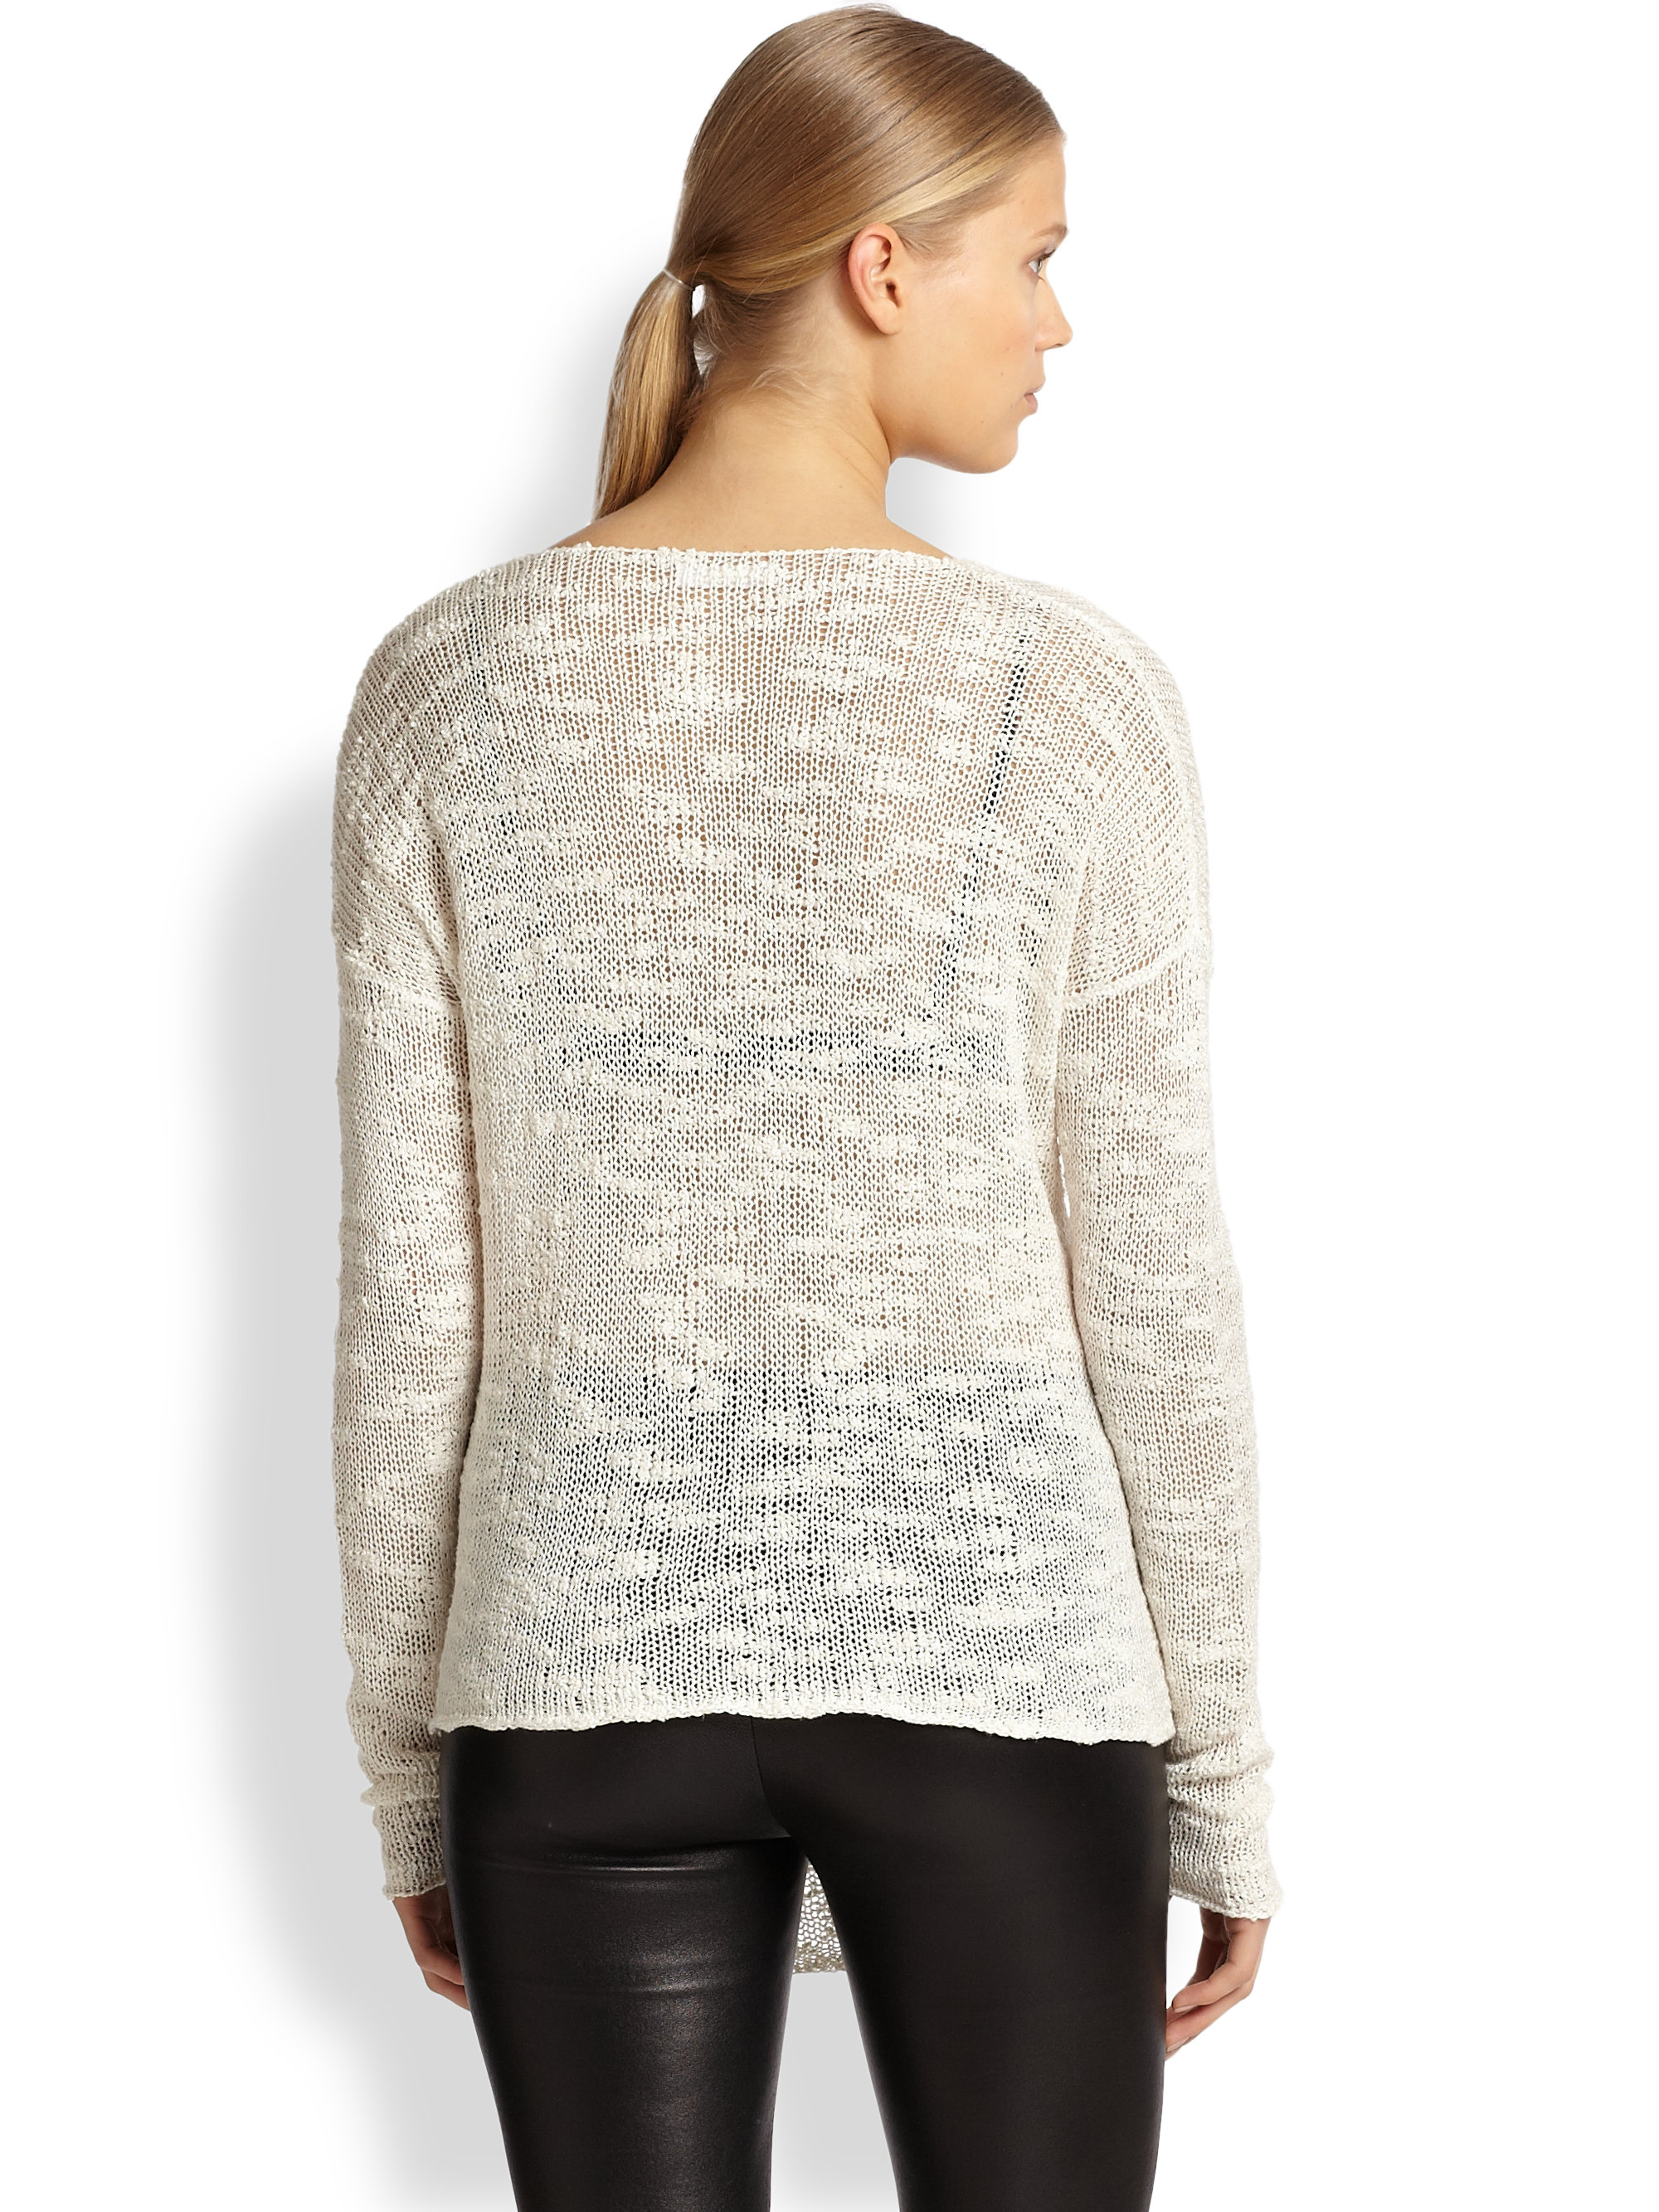 Helmut Lang Slub Silk Knit Sweater in White - Lyst